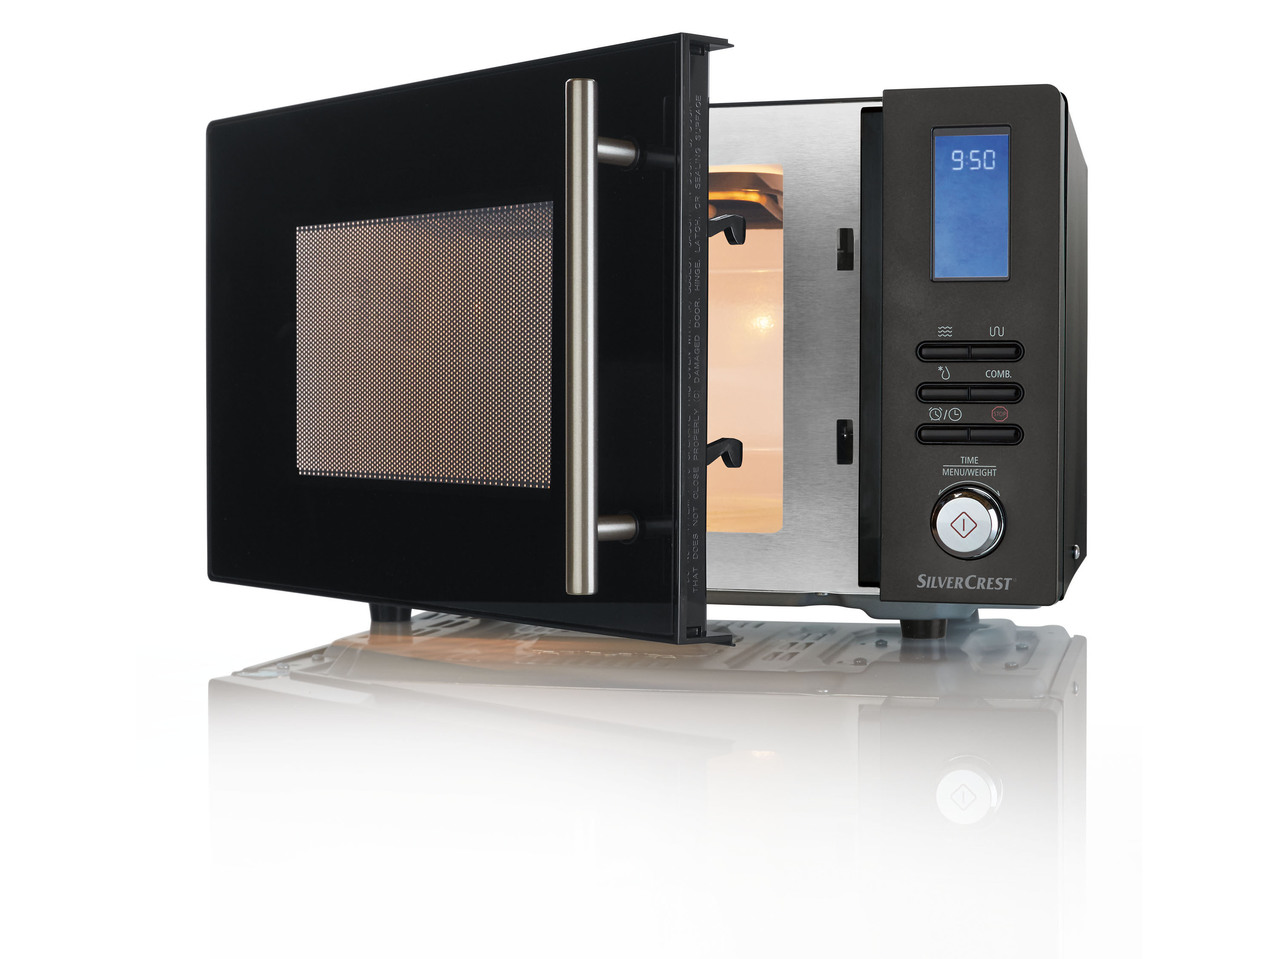 Digital Microwave Oven, in Black or Silver